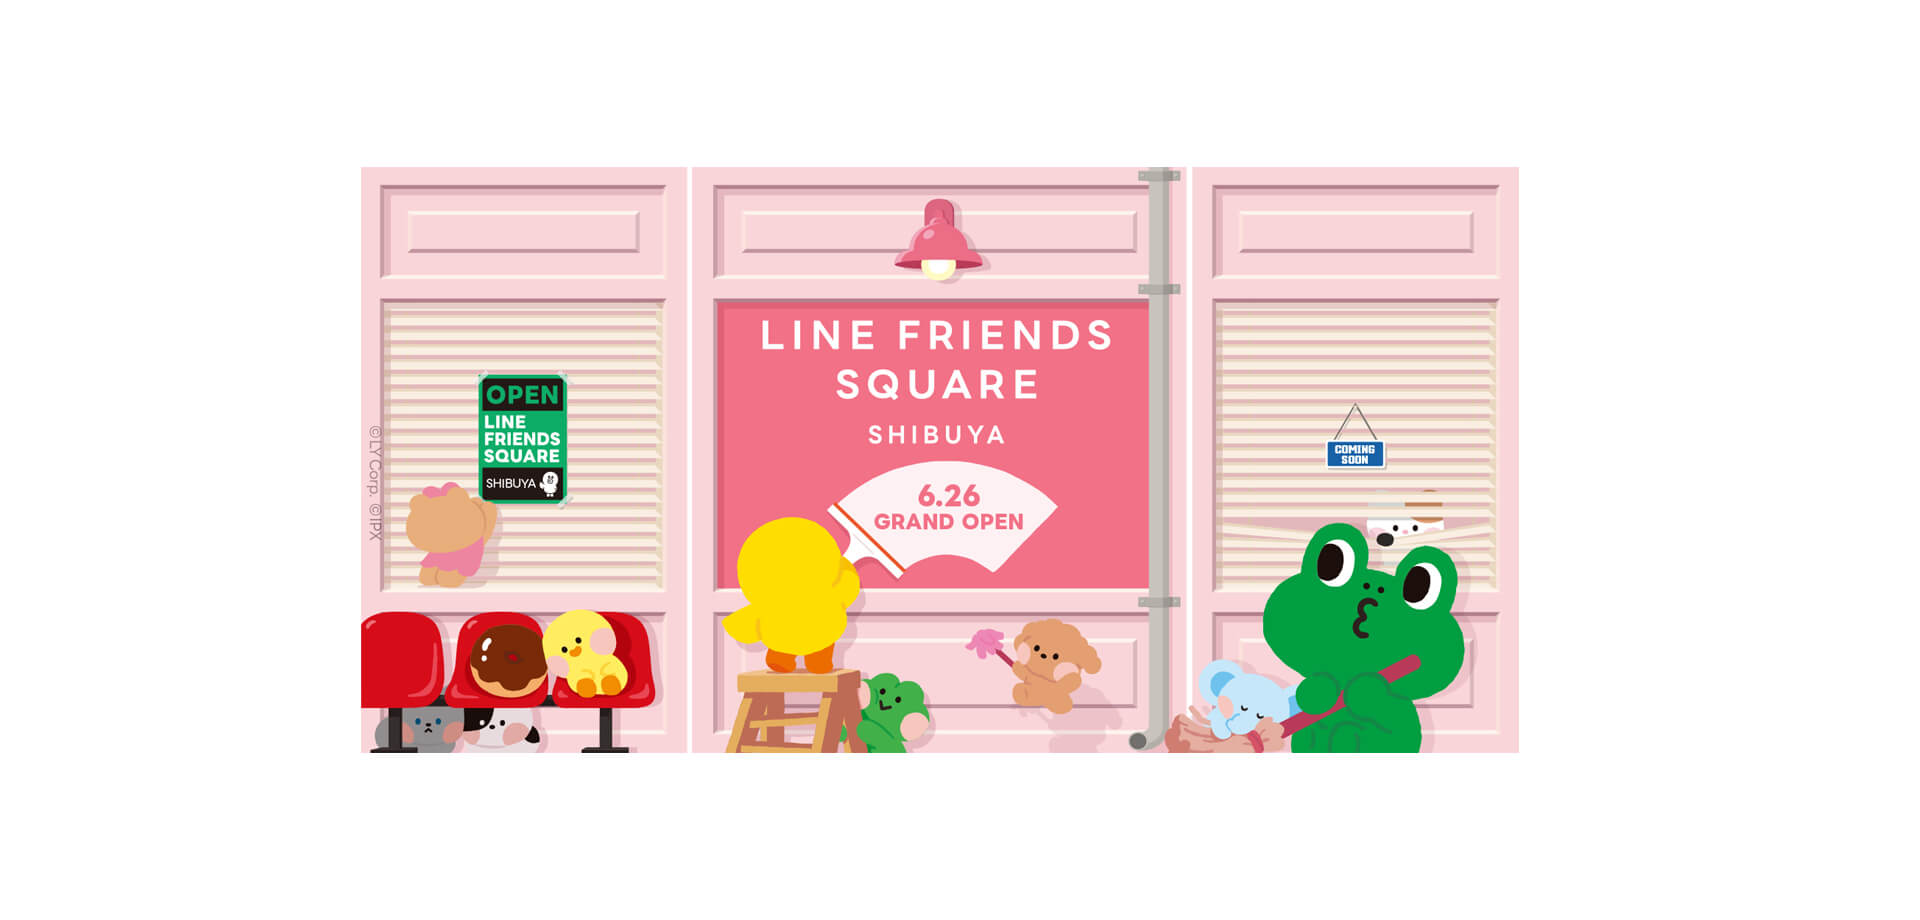 LINE FRIENDS SQUARE SHIBUYA バナー